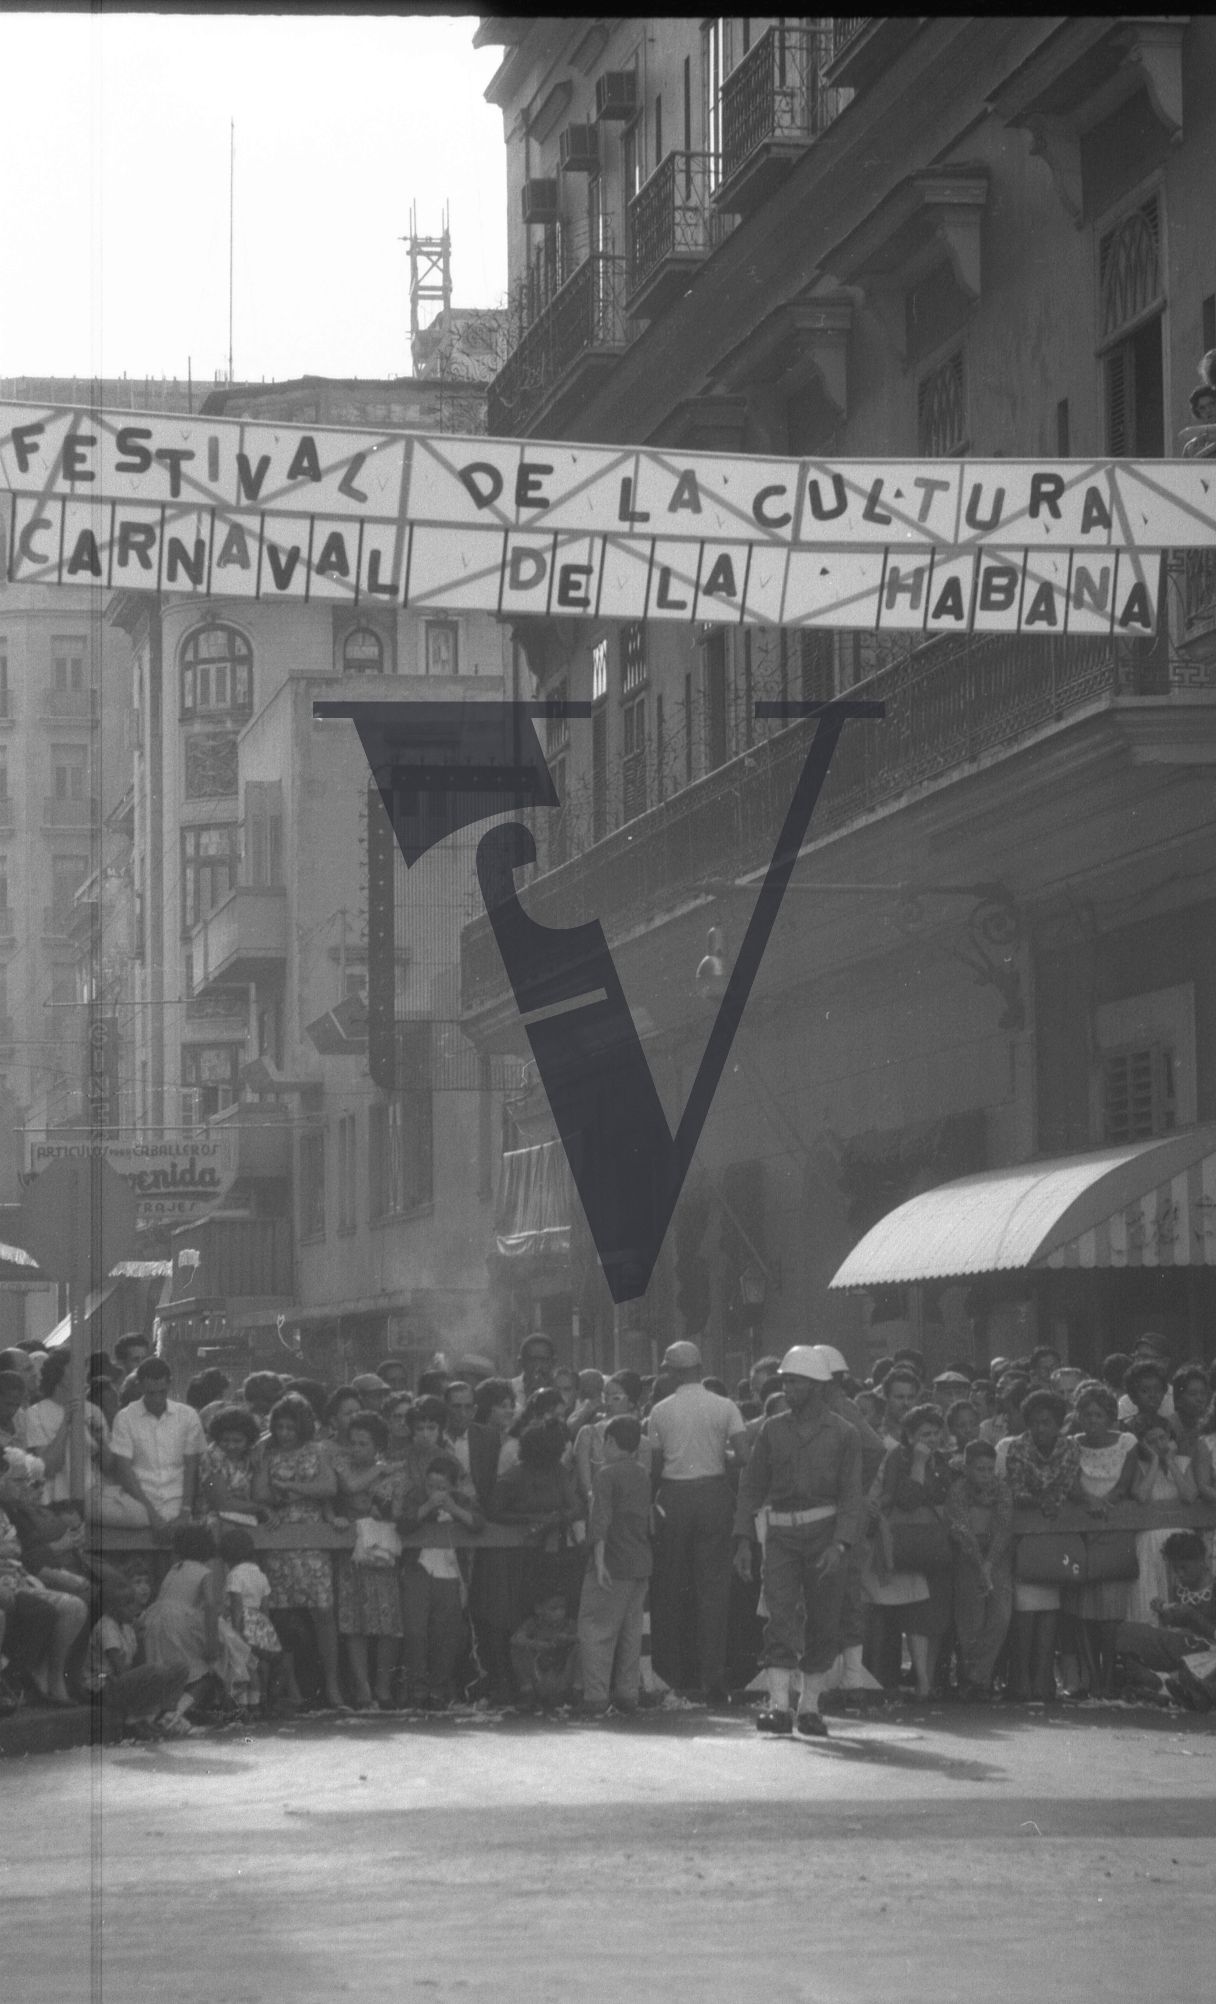 Cuba, Havana Carnival, banner spread across buildings.